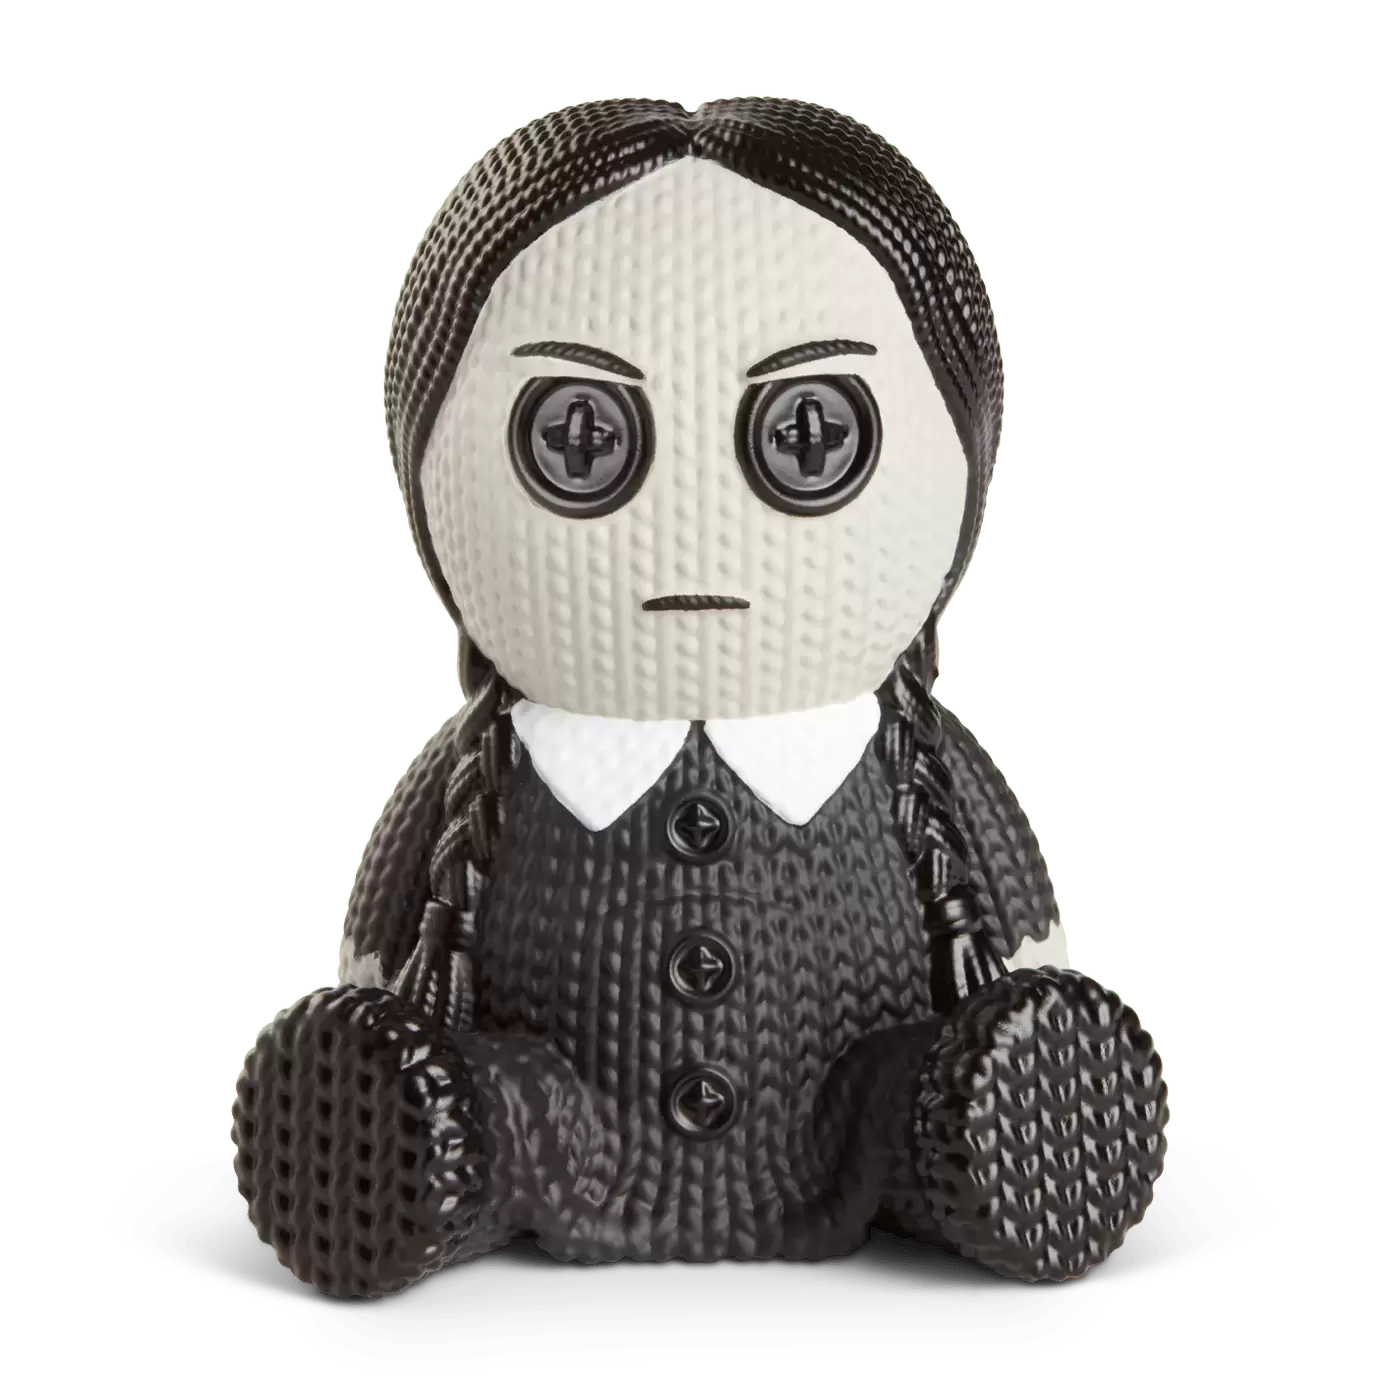 Handmade By Robots - The Addams Family - Wednesday Addams